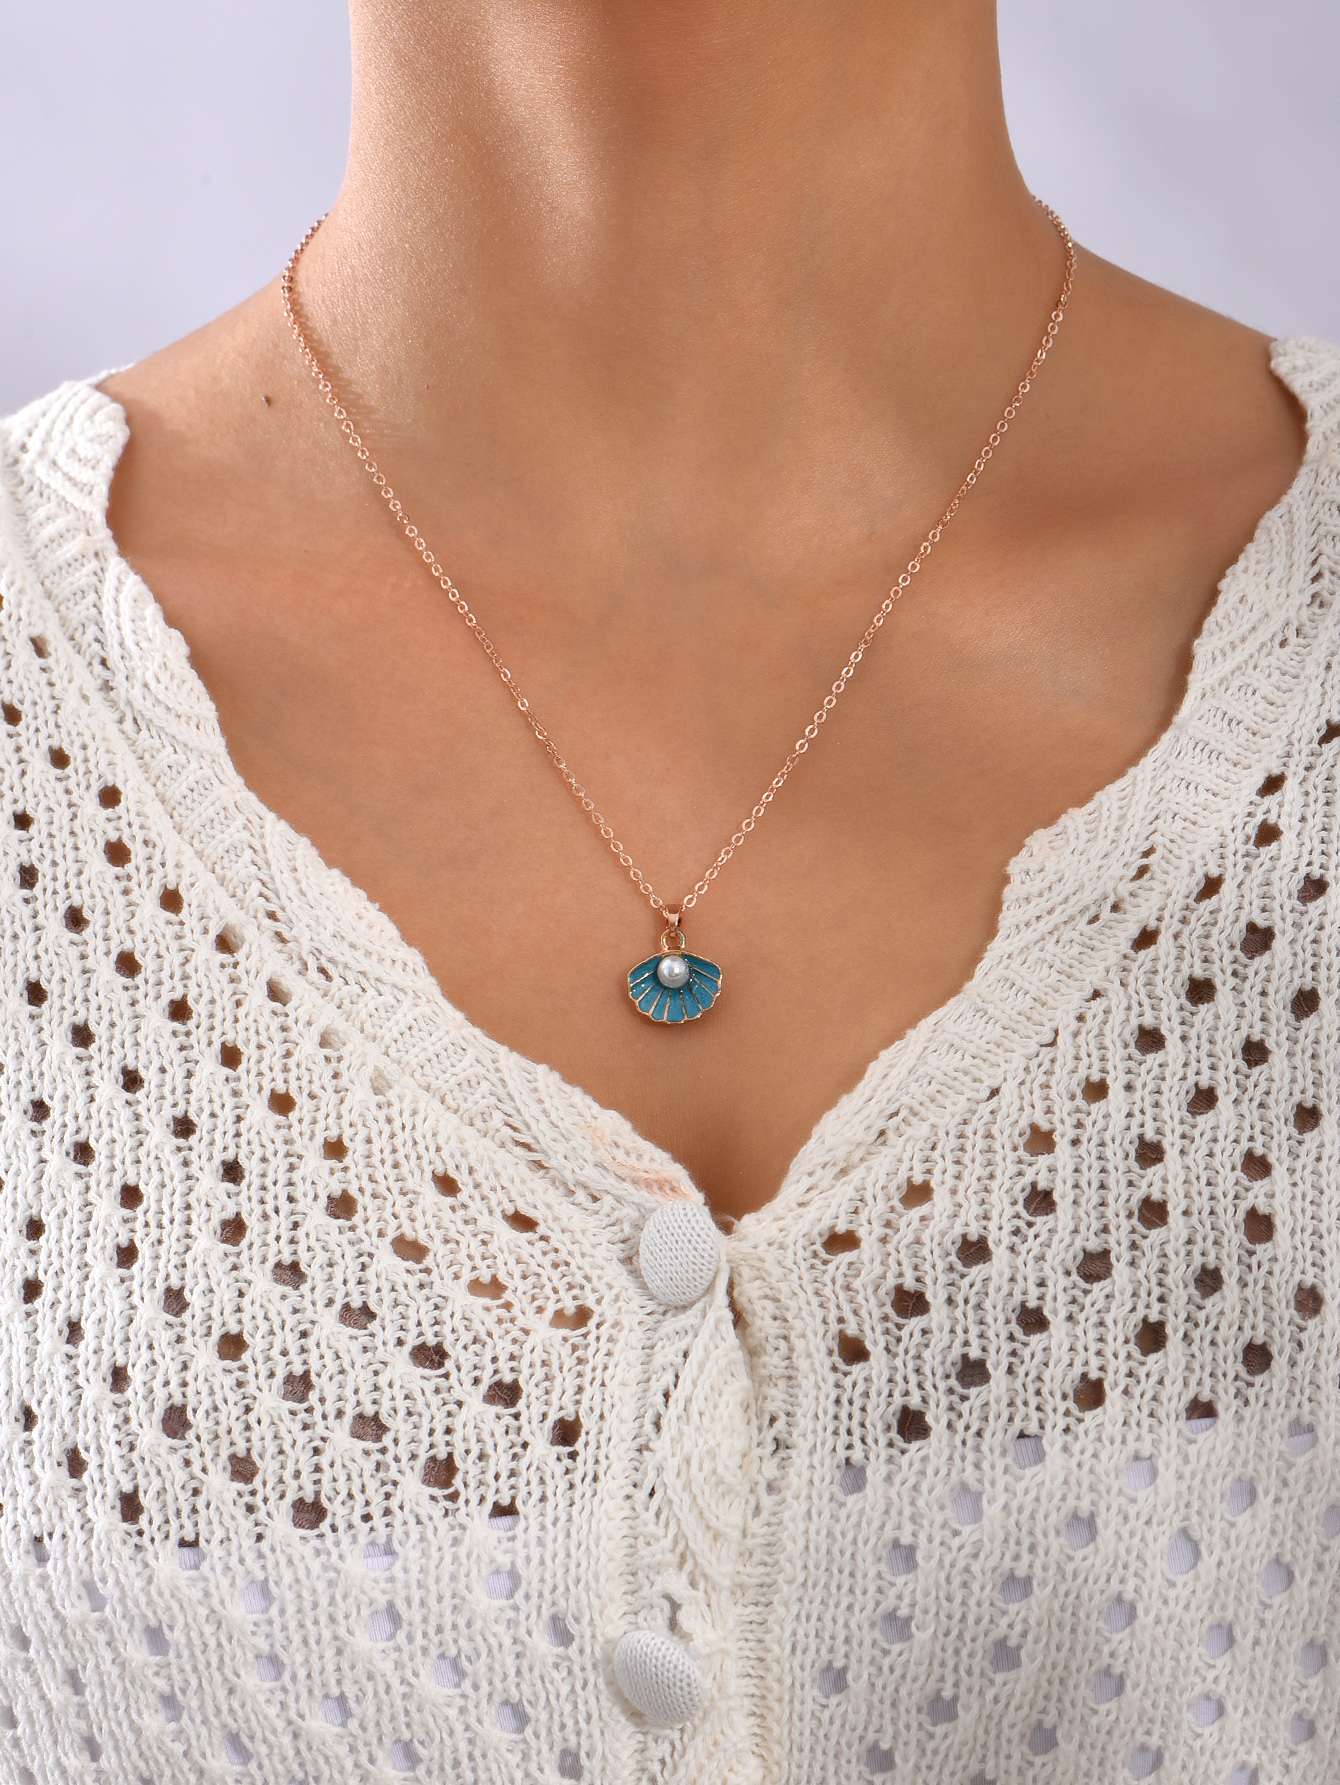 10pcs Rose Gold Tone Blue Shell with Pearl Pendant Necklace|GCJ300|UK SELLER